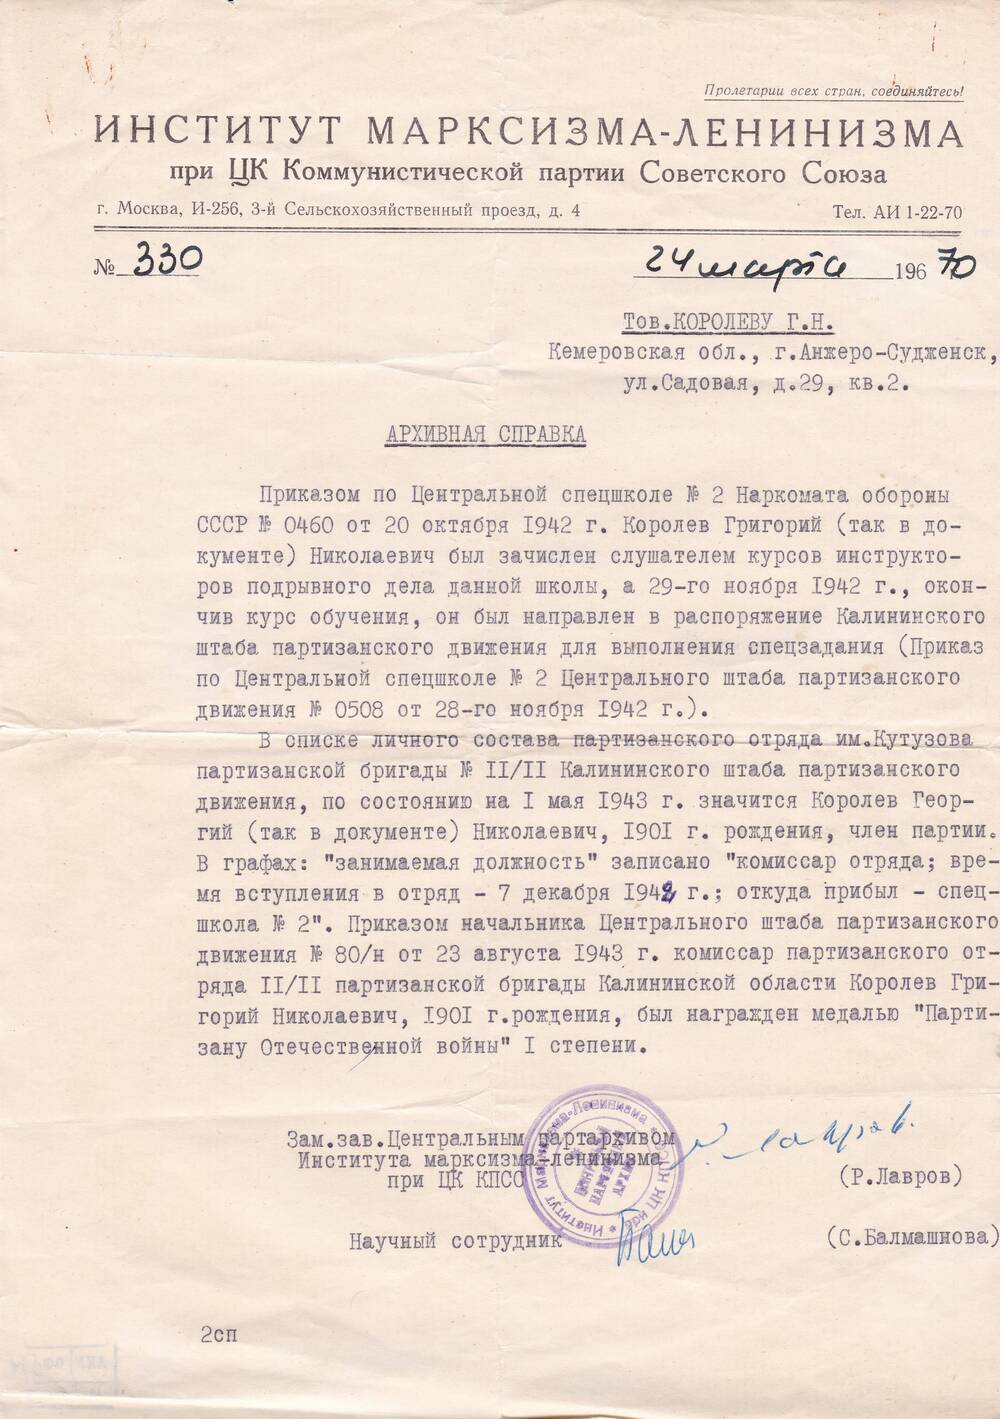 Справка архивная Г.Н. Королёва